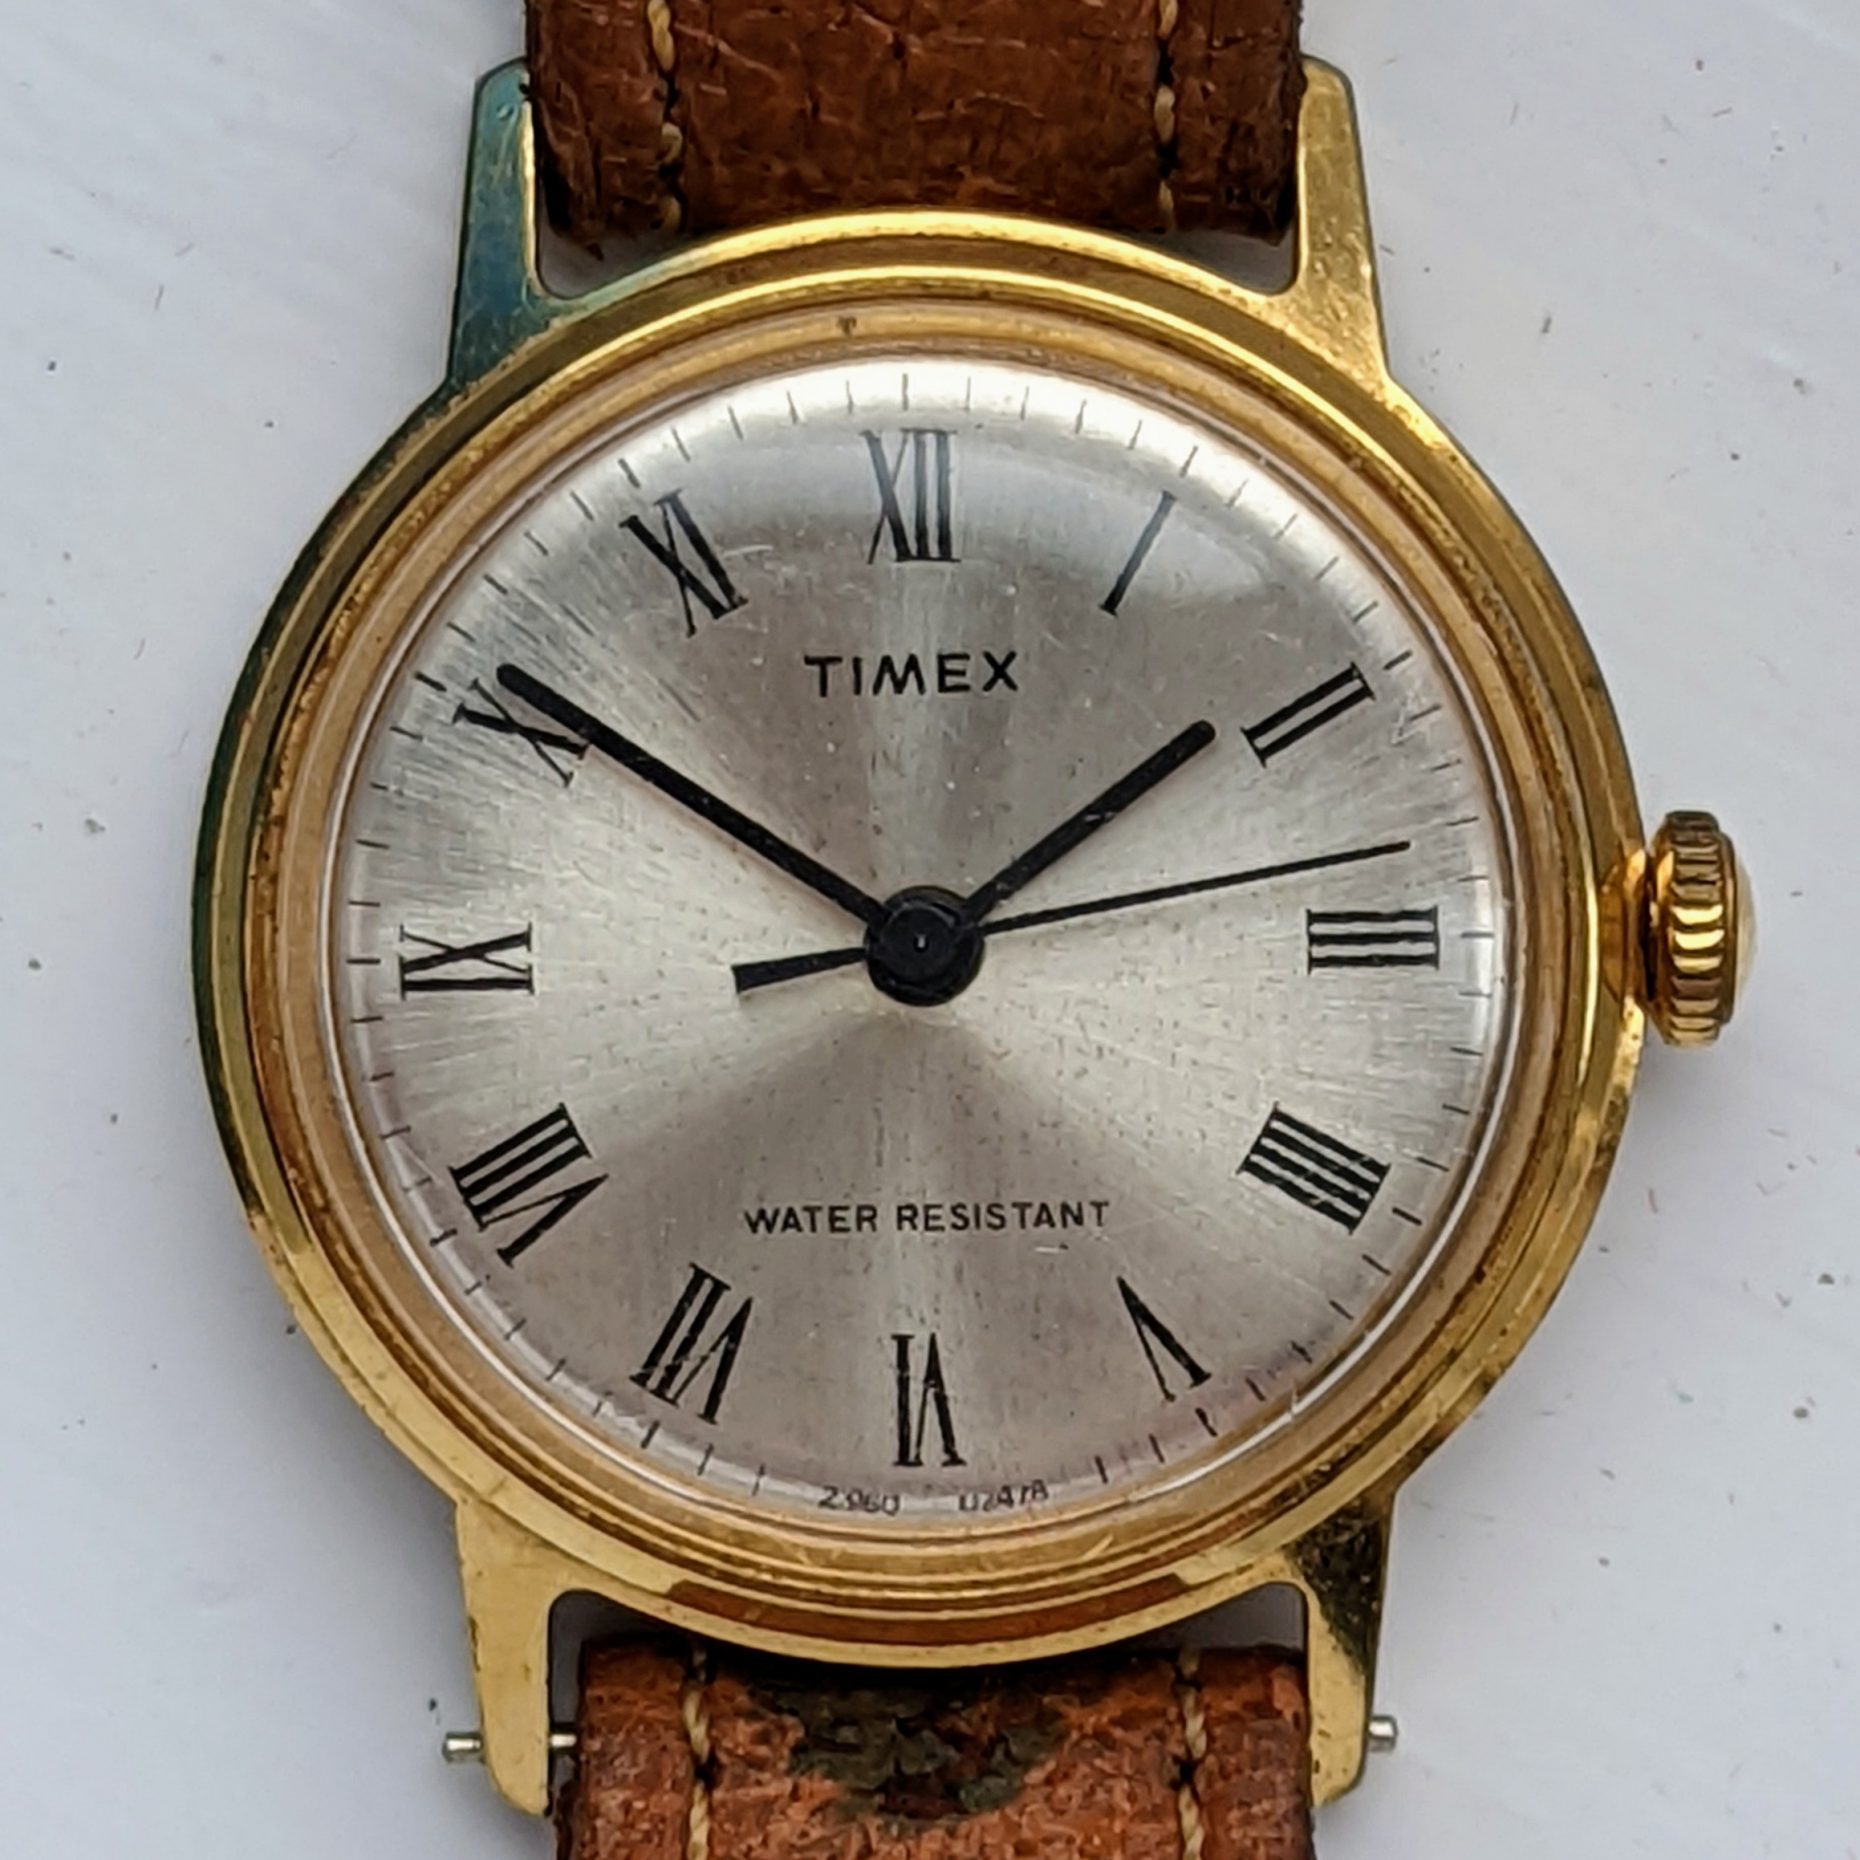 Timex Sprite 23160 02478 [1978]